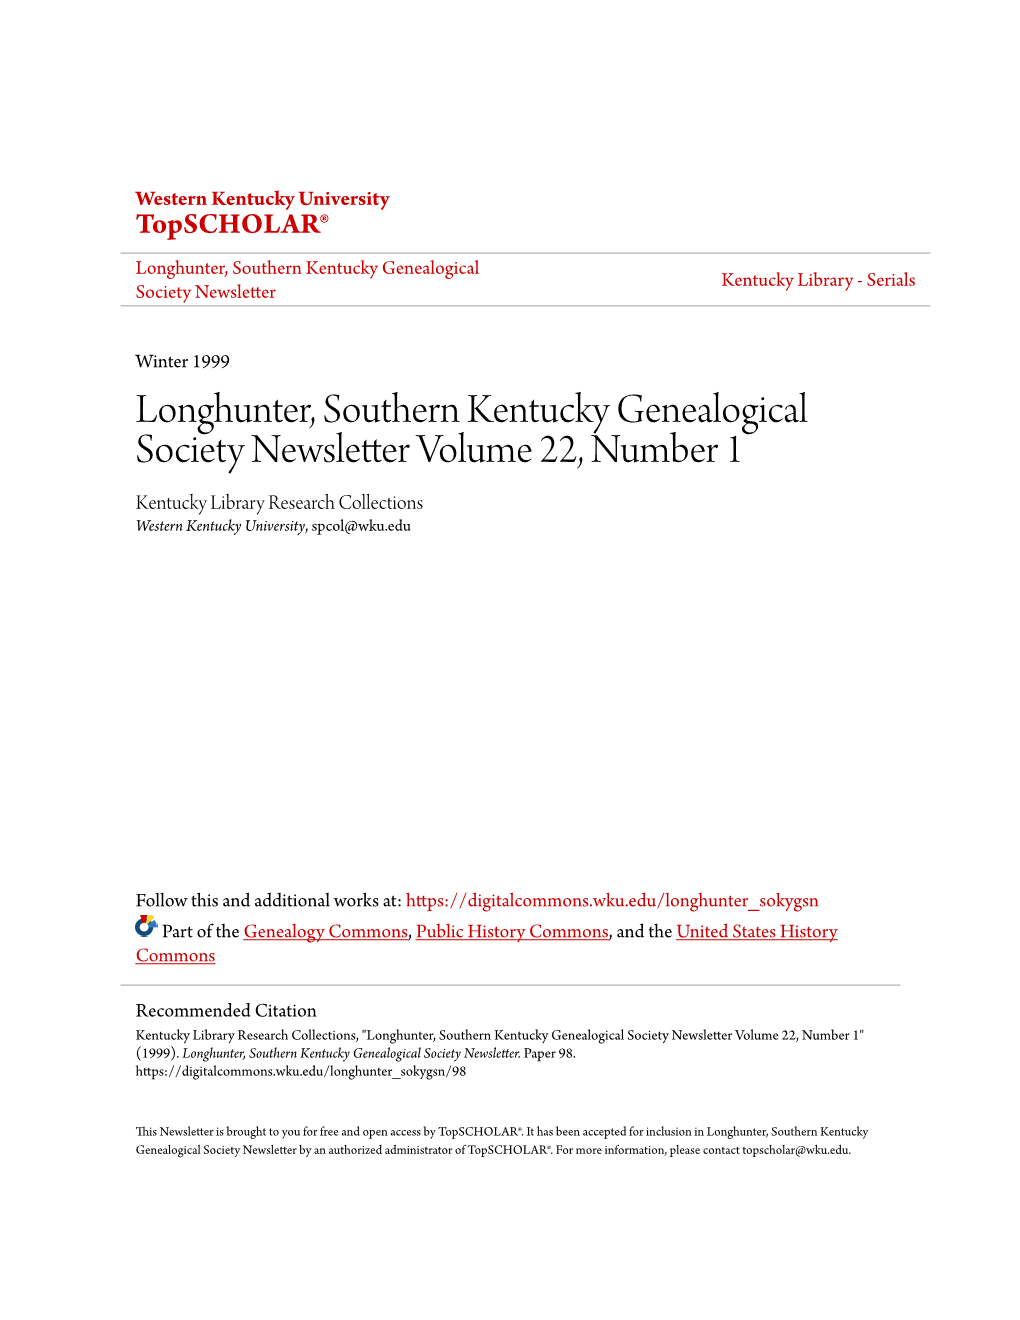 Longhunter, Southern Kentucky Genealogical Society Newsletter Volume 22, Number 1 Kentucky Library Research Collections Western Kentucky University, Spcol@Wku.Edu